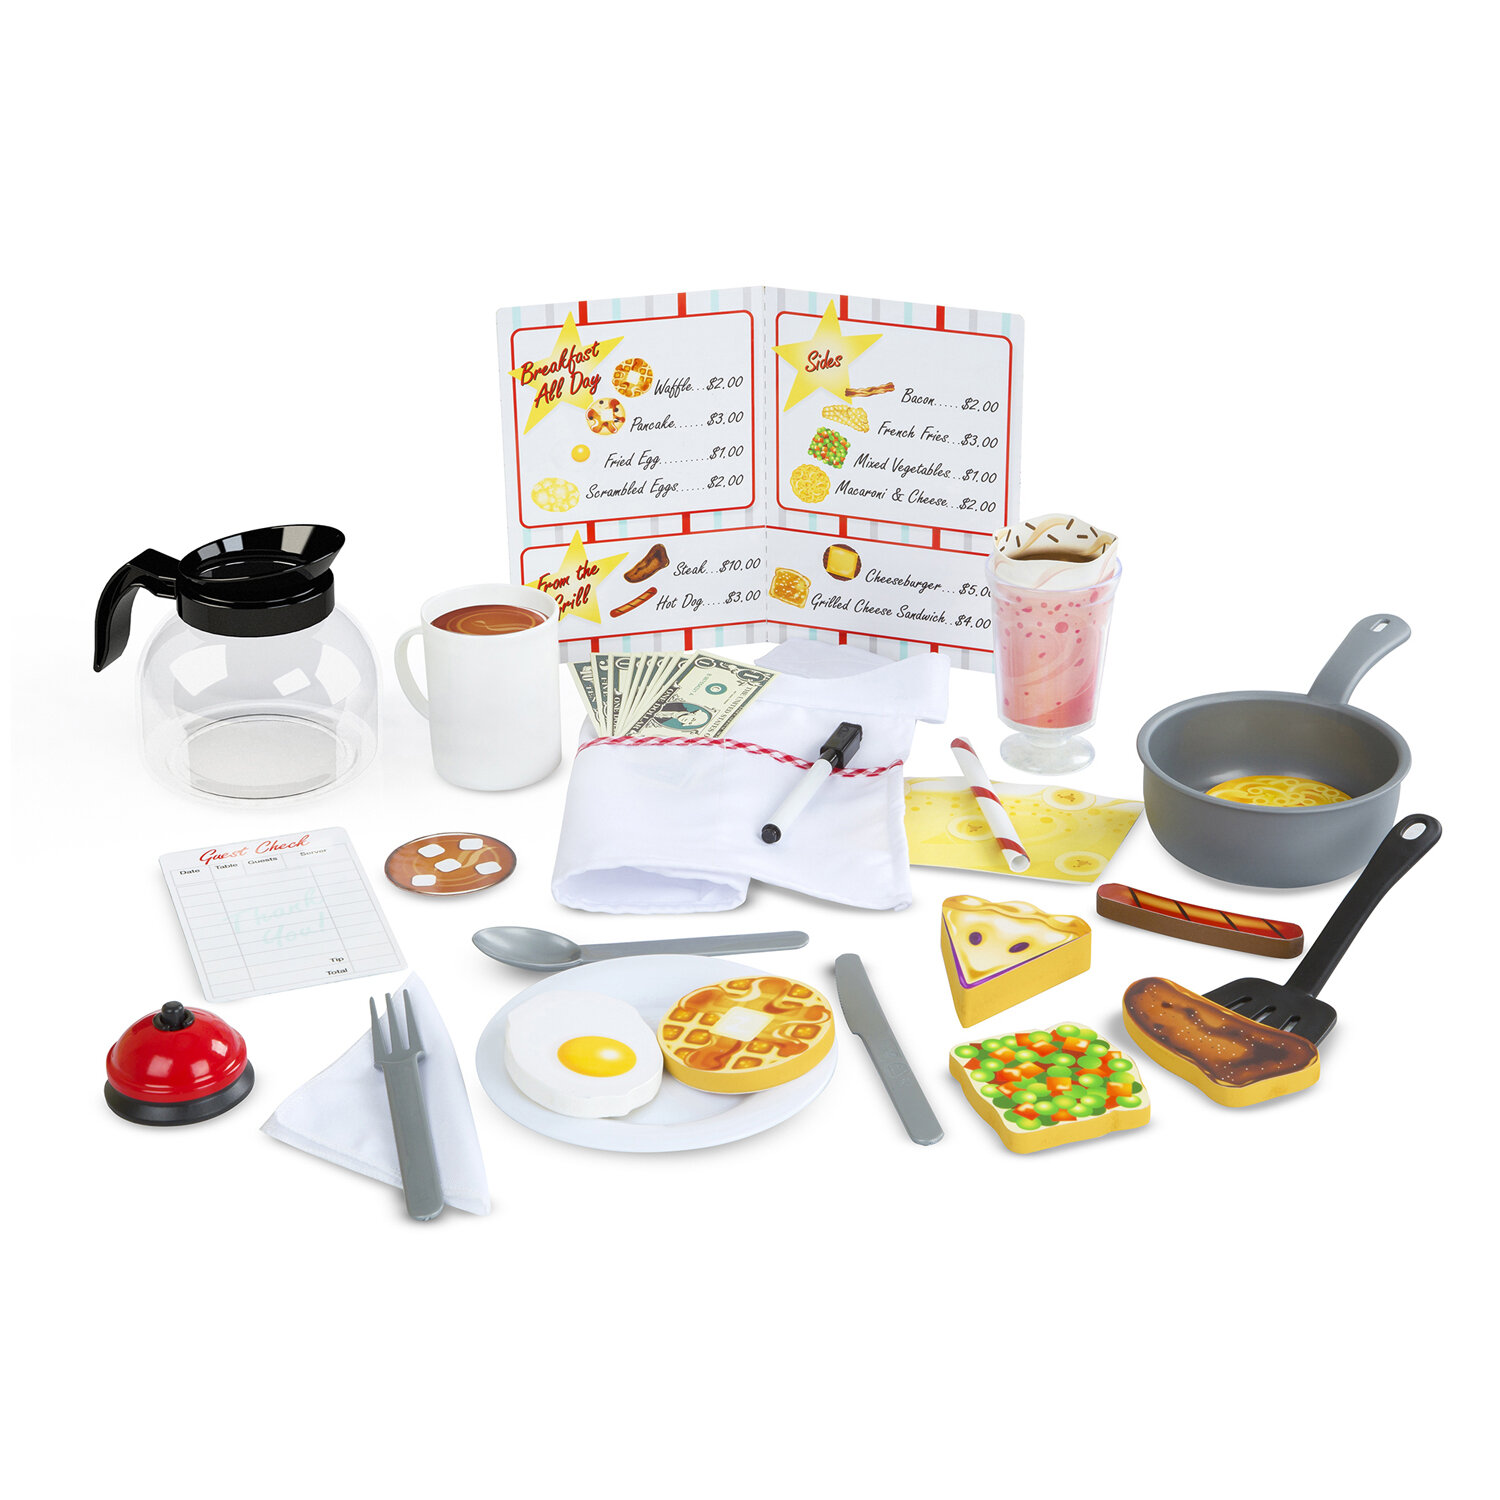 Melissa & Doug 22-Piece Play Kitchen Accessories Set - Utensils, Pot, Pans,  and More